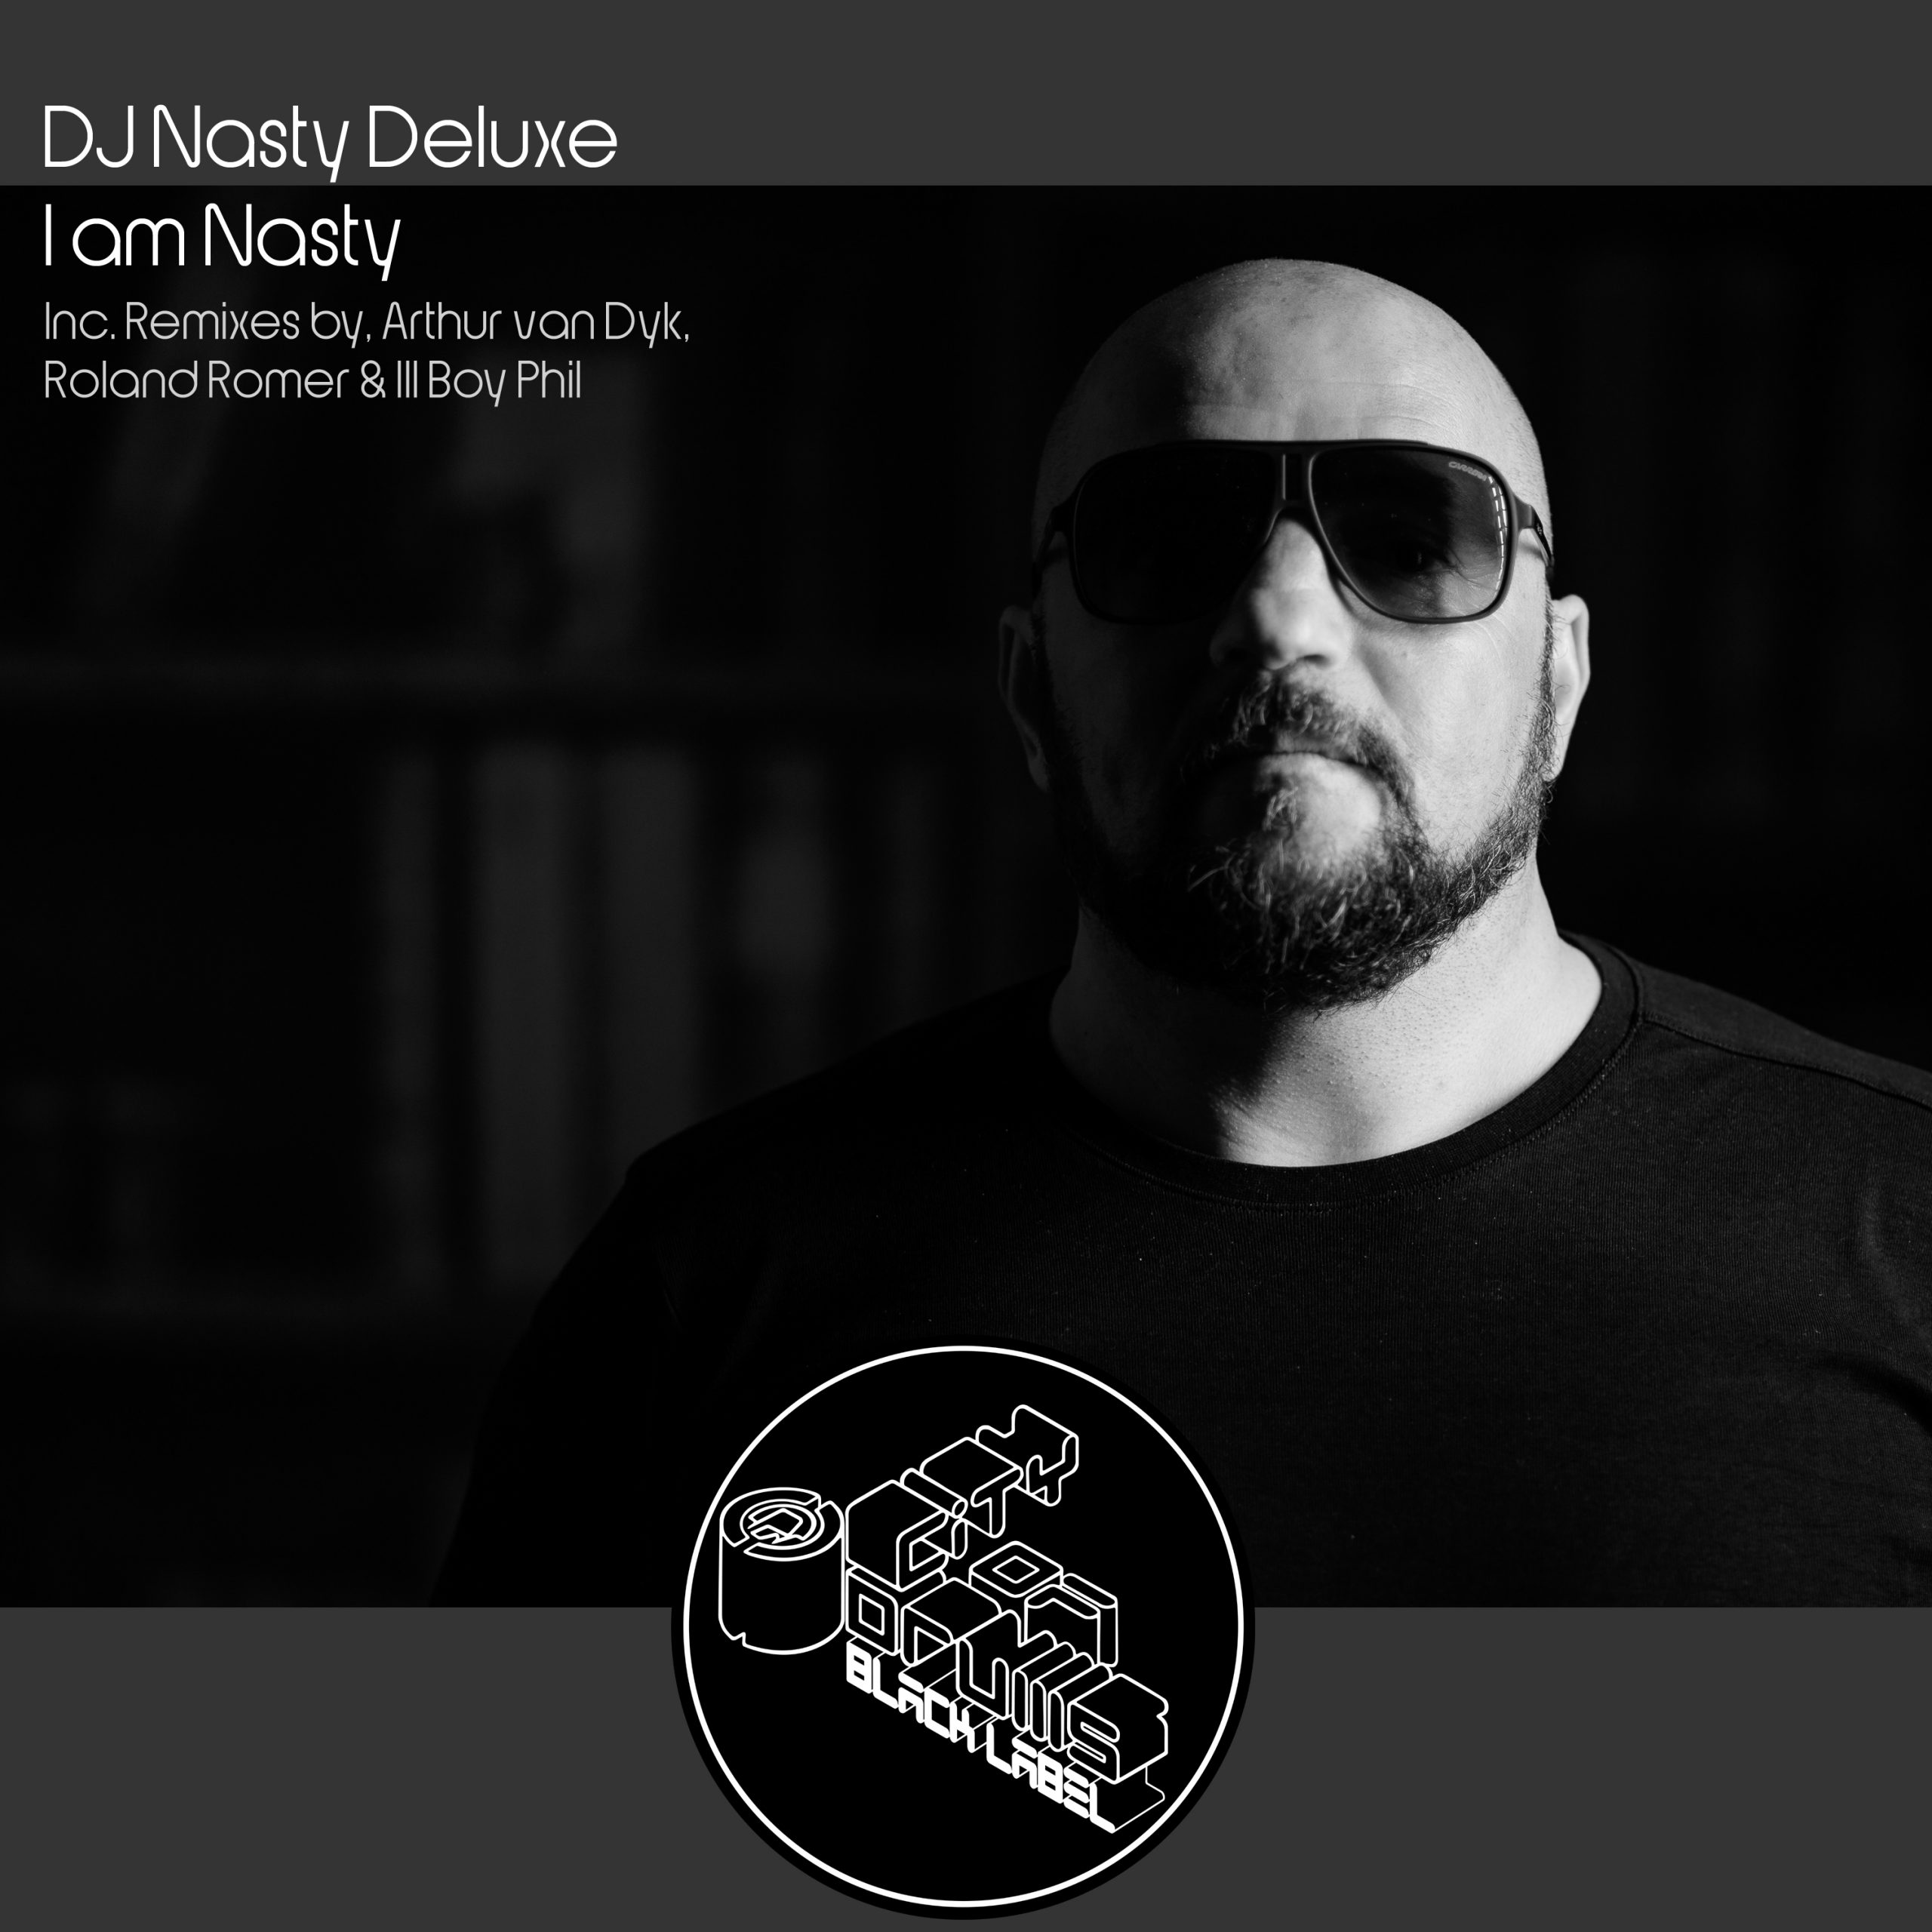 OUT NOW!!! I am Nasty von DJ Nasty Deluxe! 7